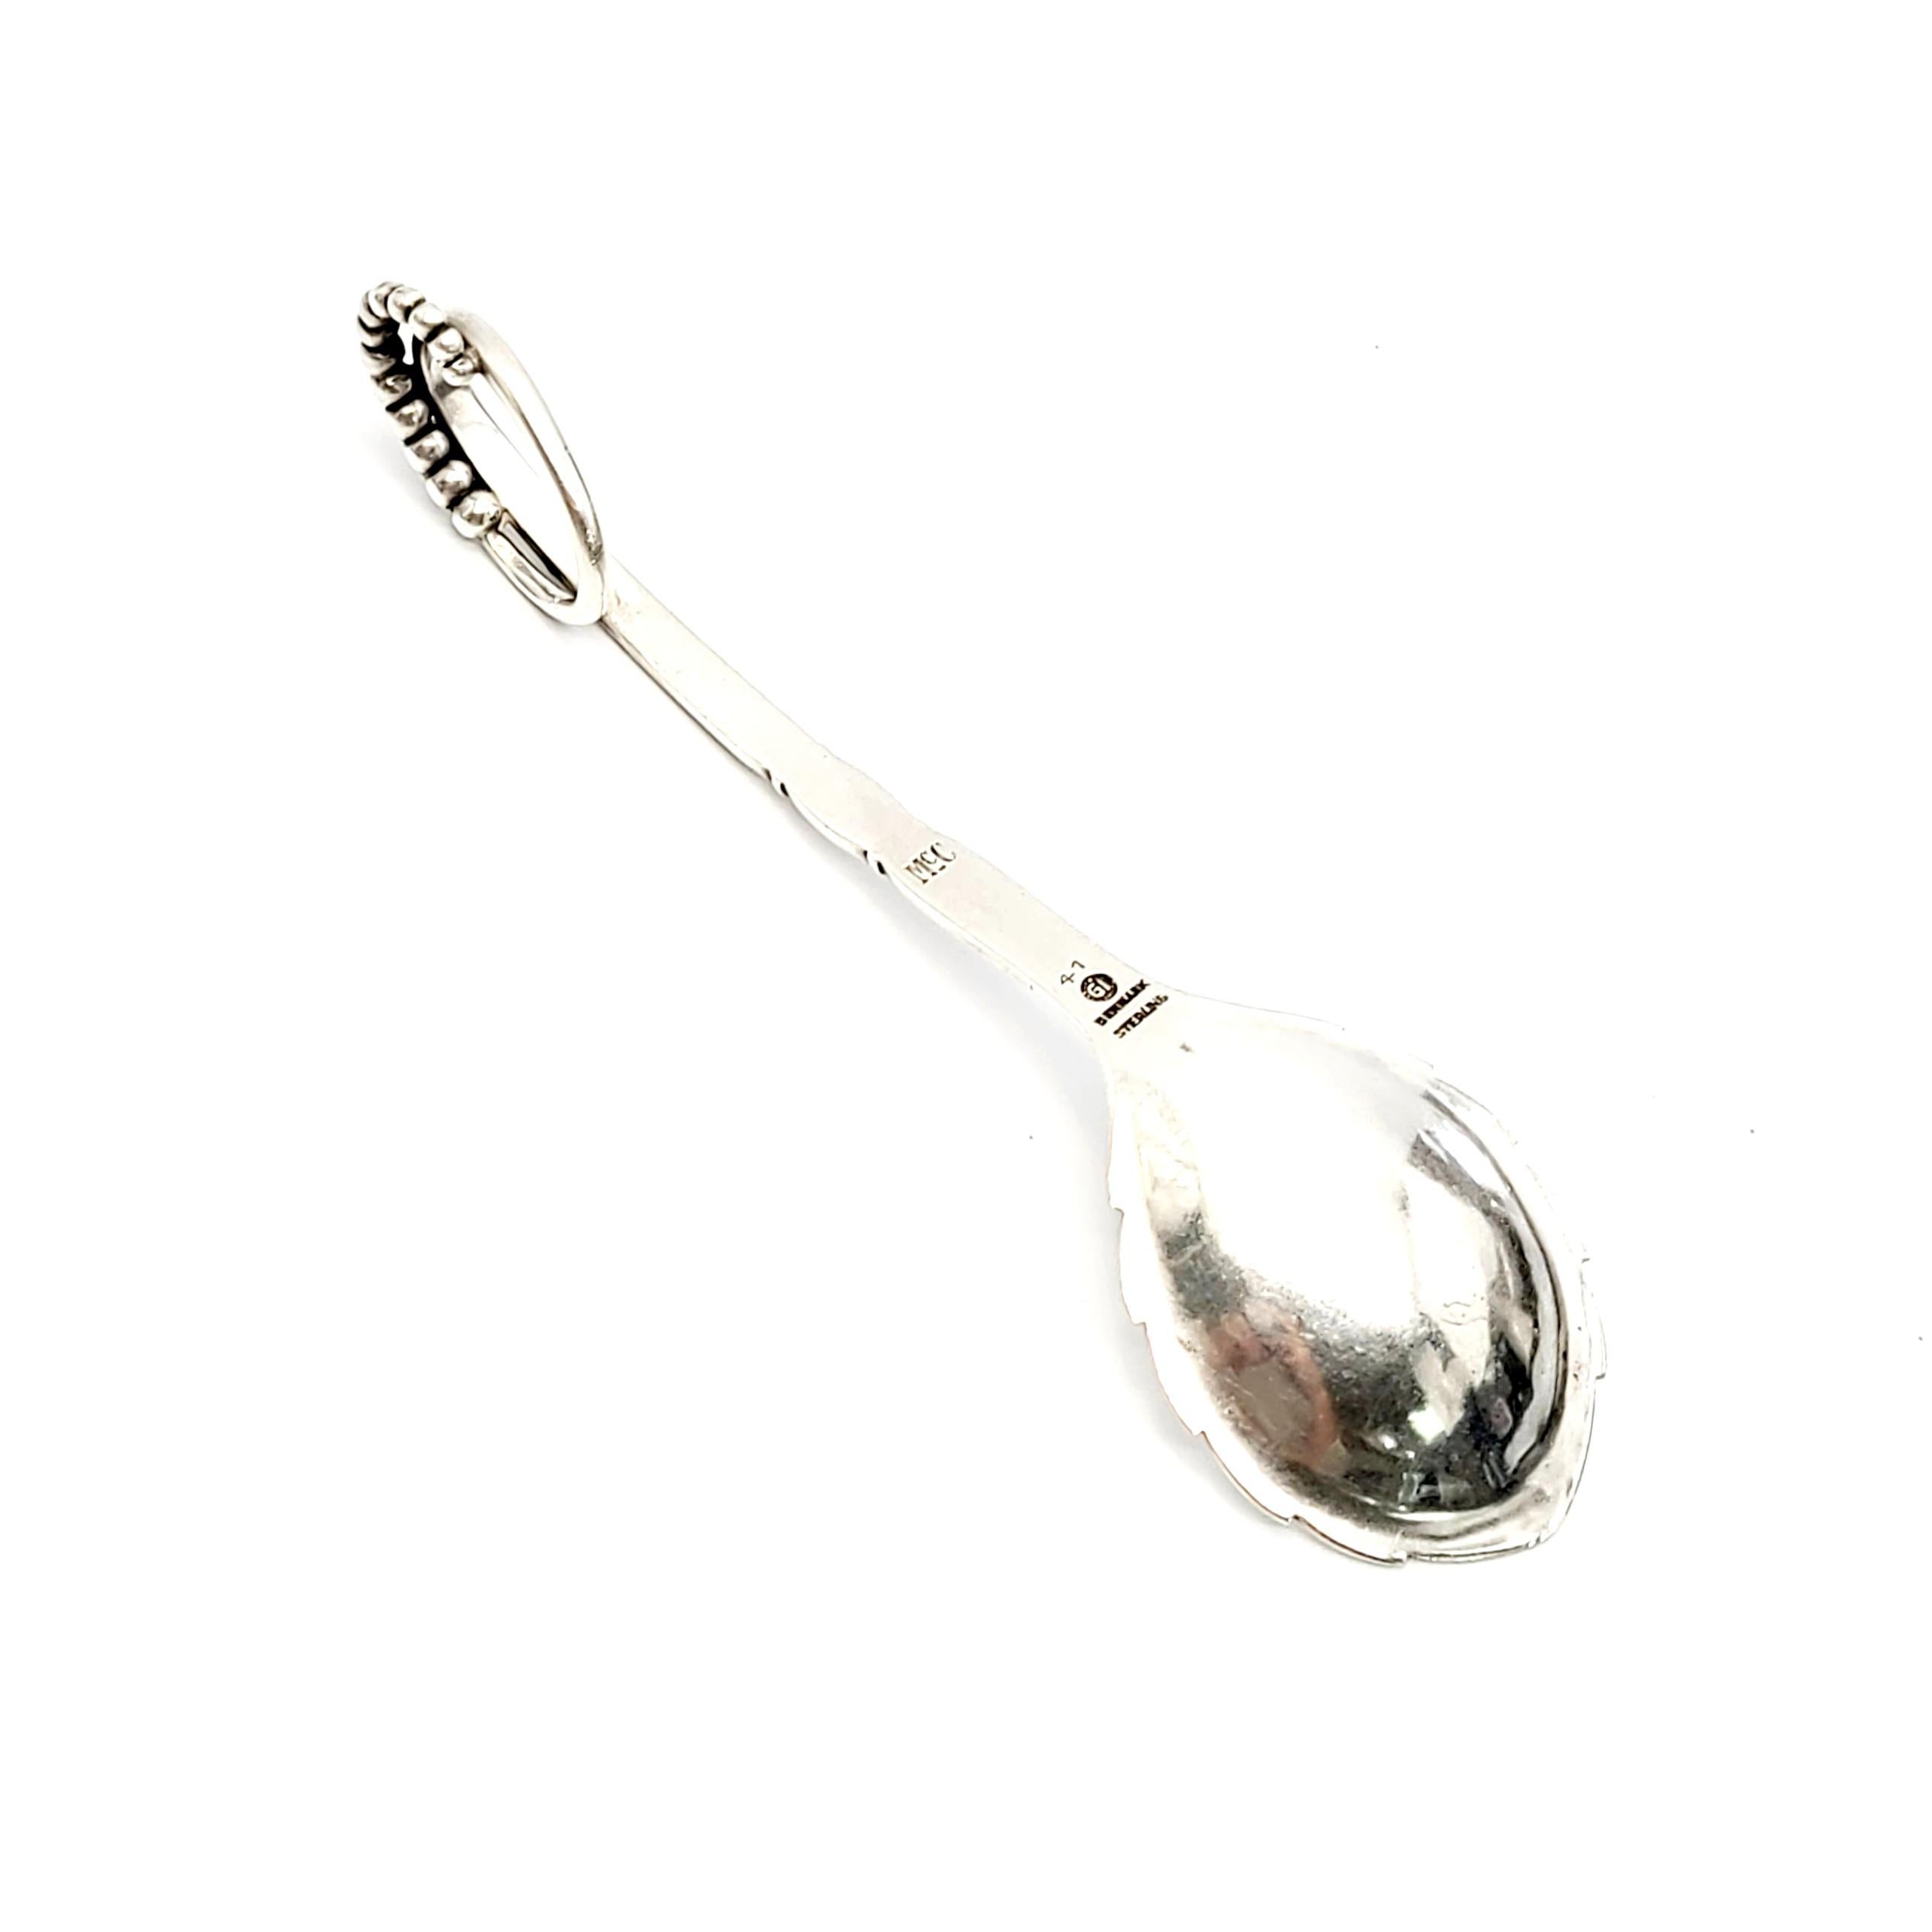 Danish Georg Jensen Denmark Sterling Silver Ornamental #41 Sugar Spoon